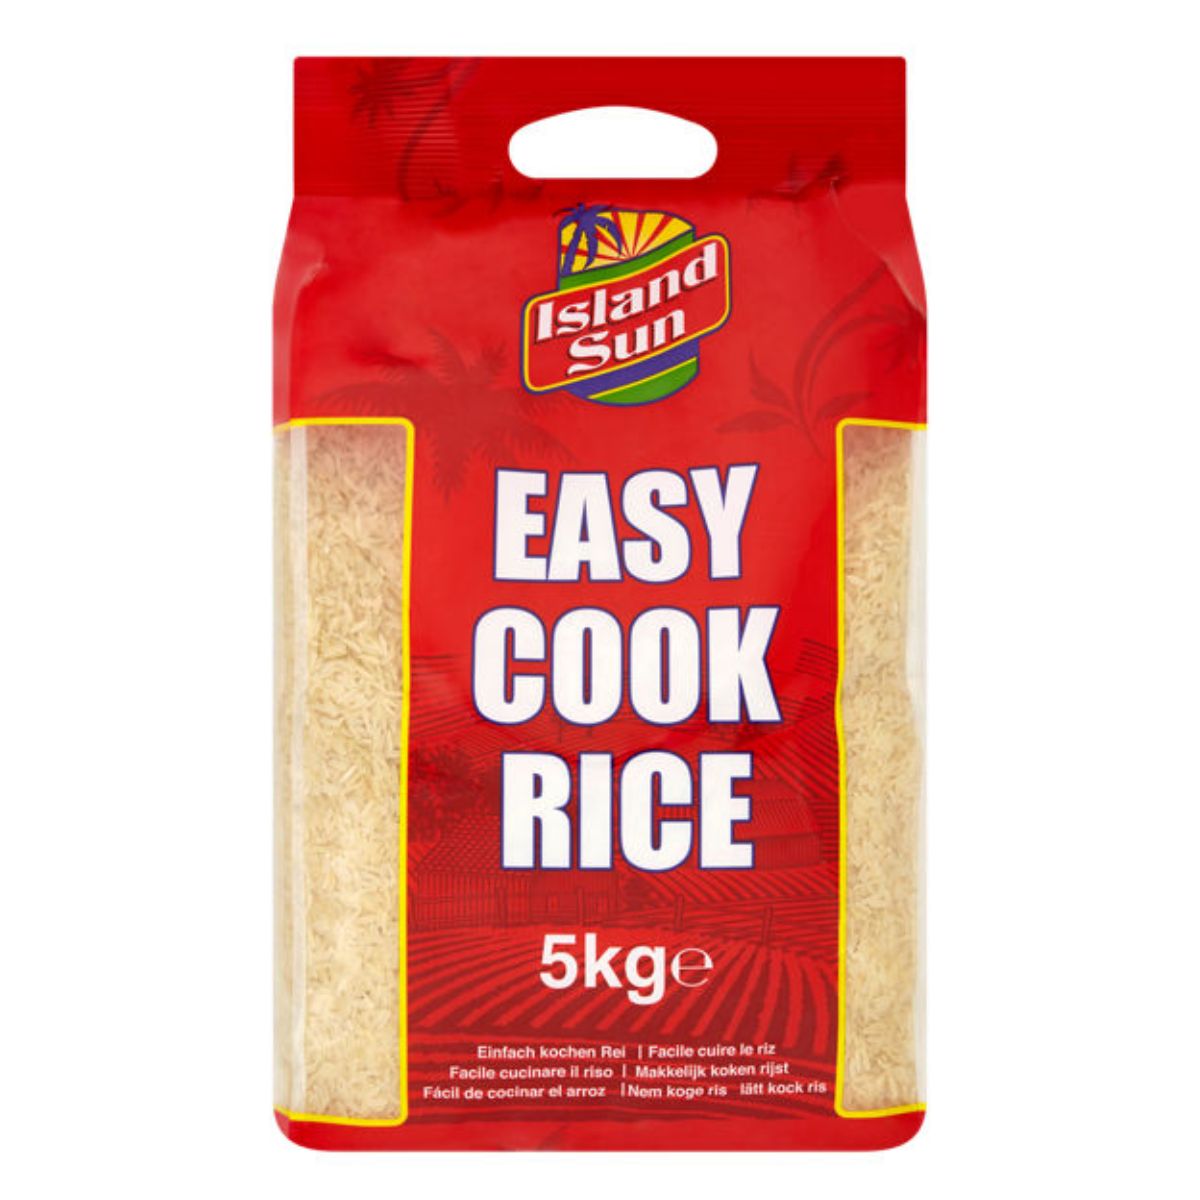 Island Sun - Easy Cook Rice - 5kg.